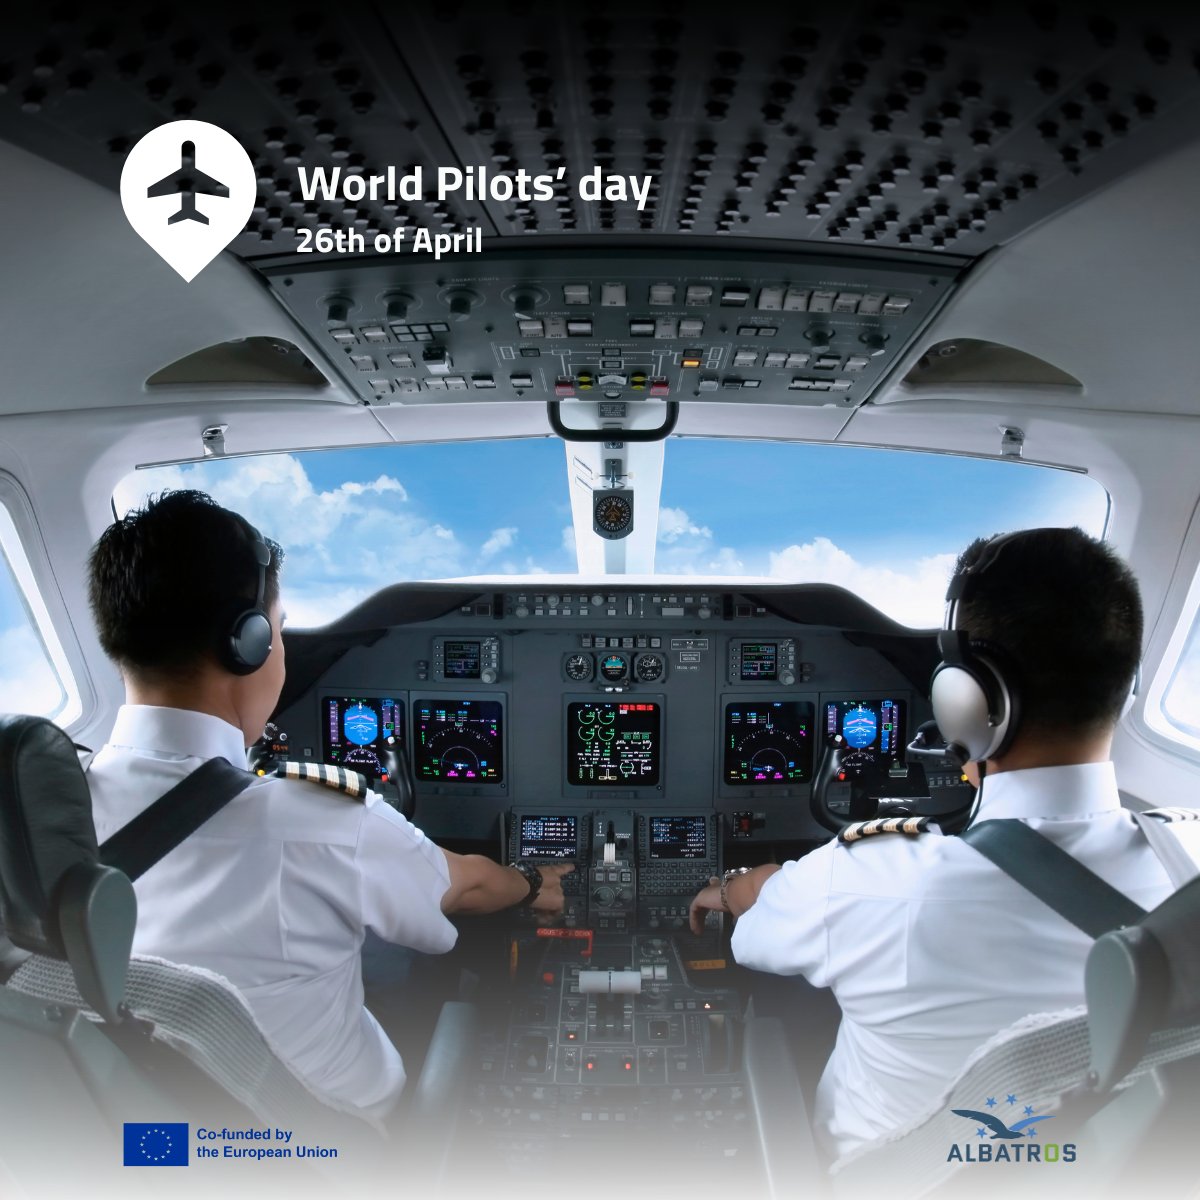 Happy world pilots' day! ✈️